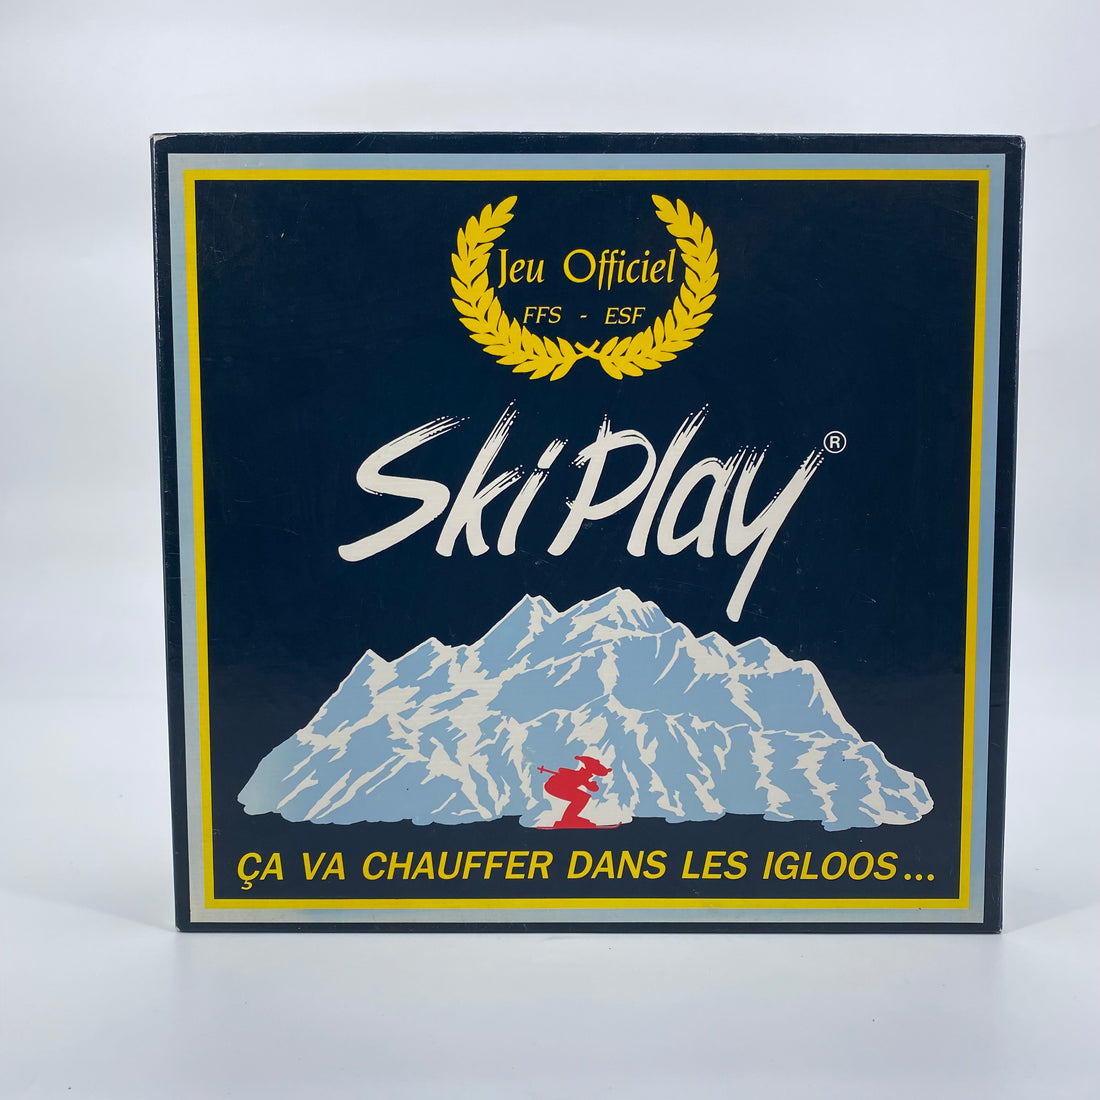 Ski play - ça va chauffer dans les igloos...- Édition 1989